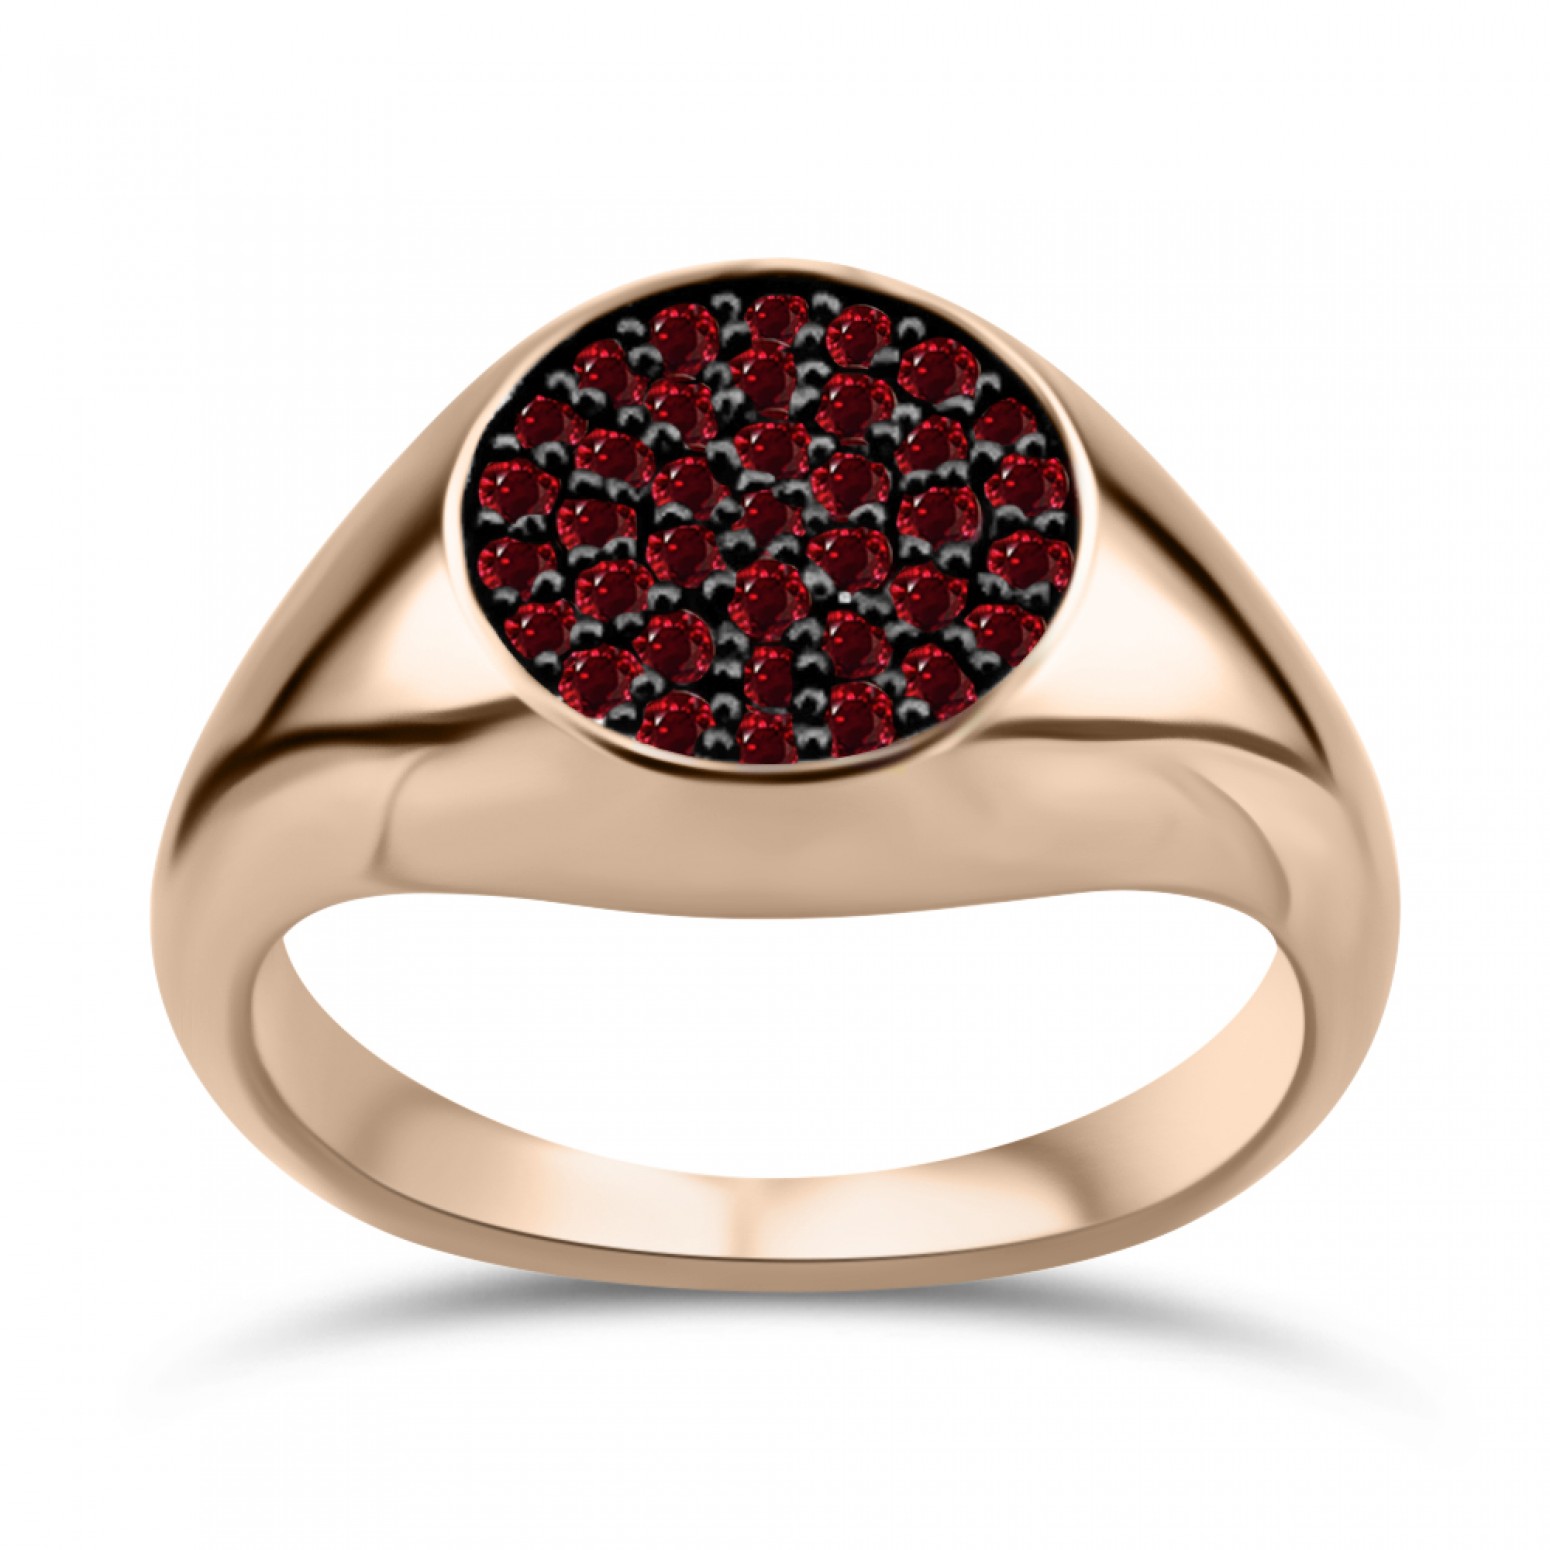 Ring, 18K pink gold with rubies 0.39ct, da3994 RINGS Κοσμηματα - chrilia.gr